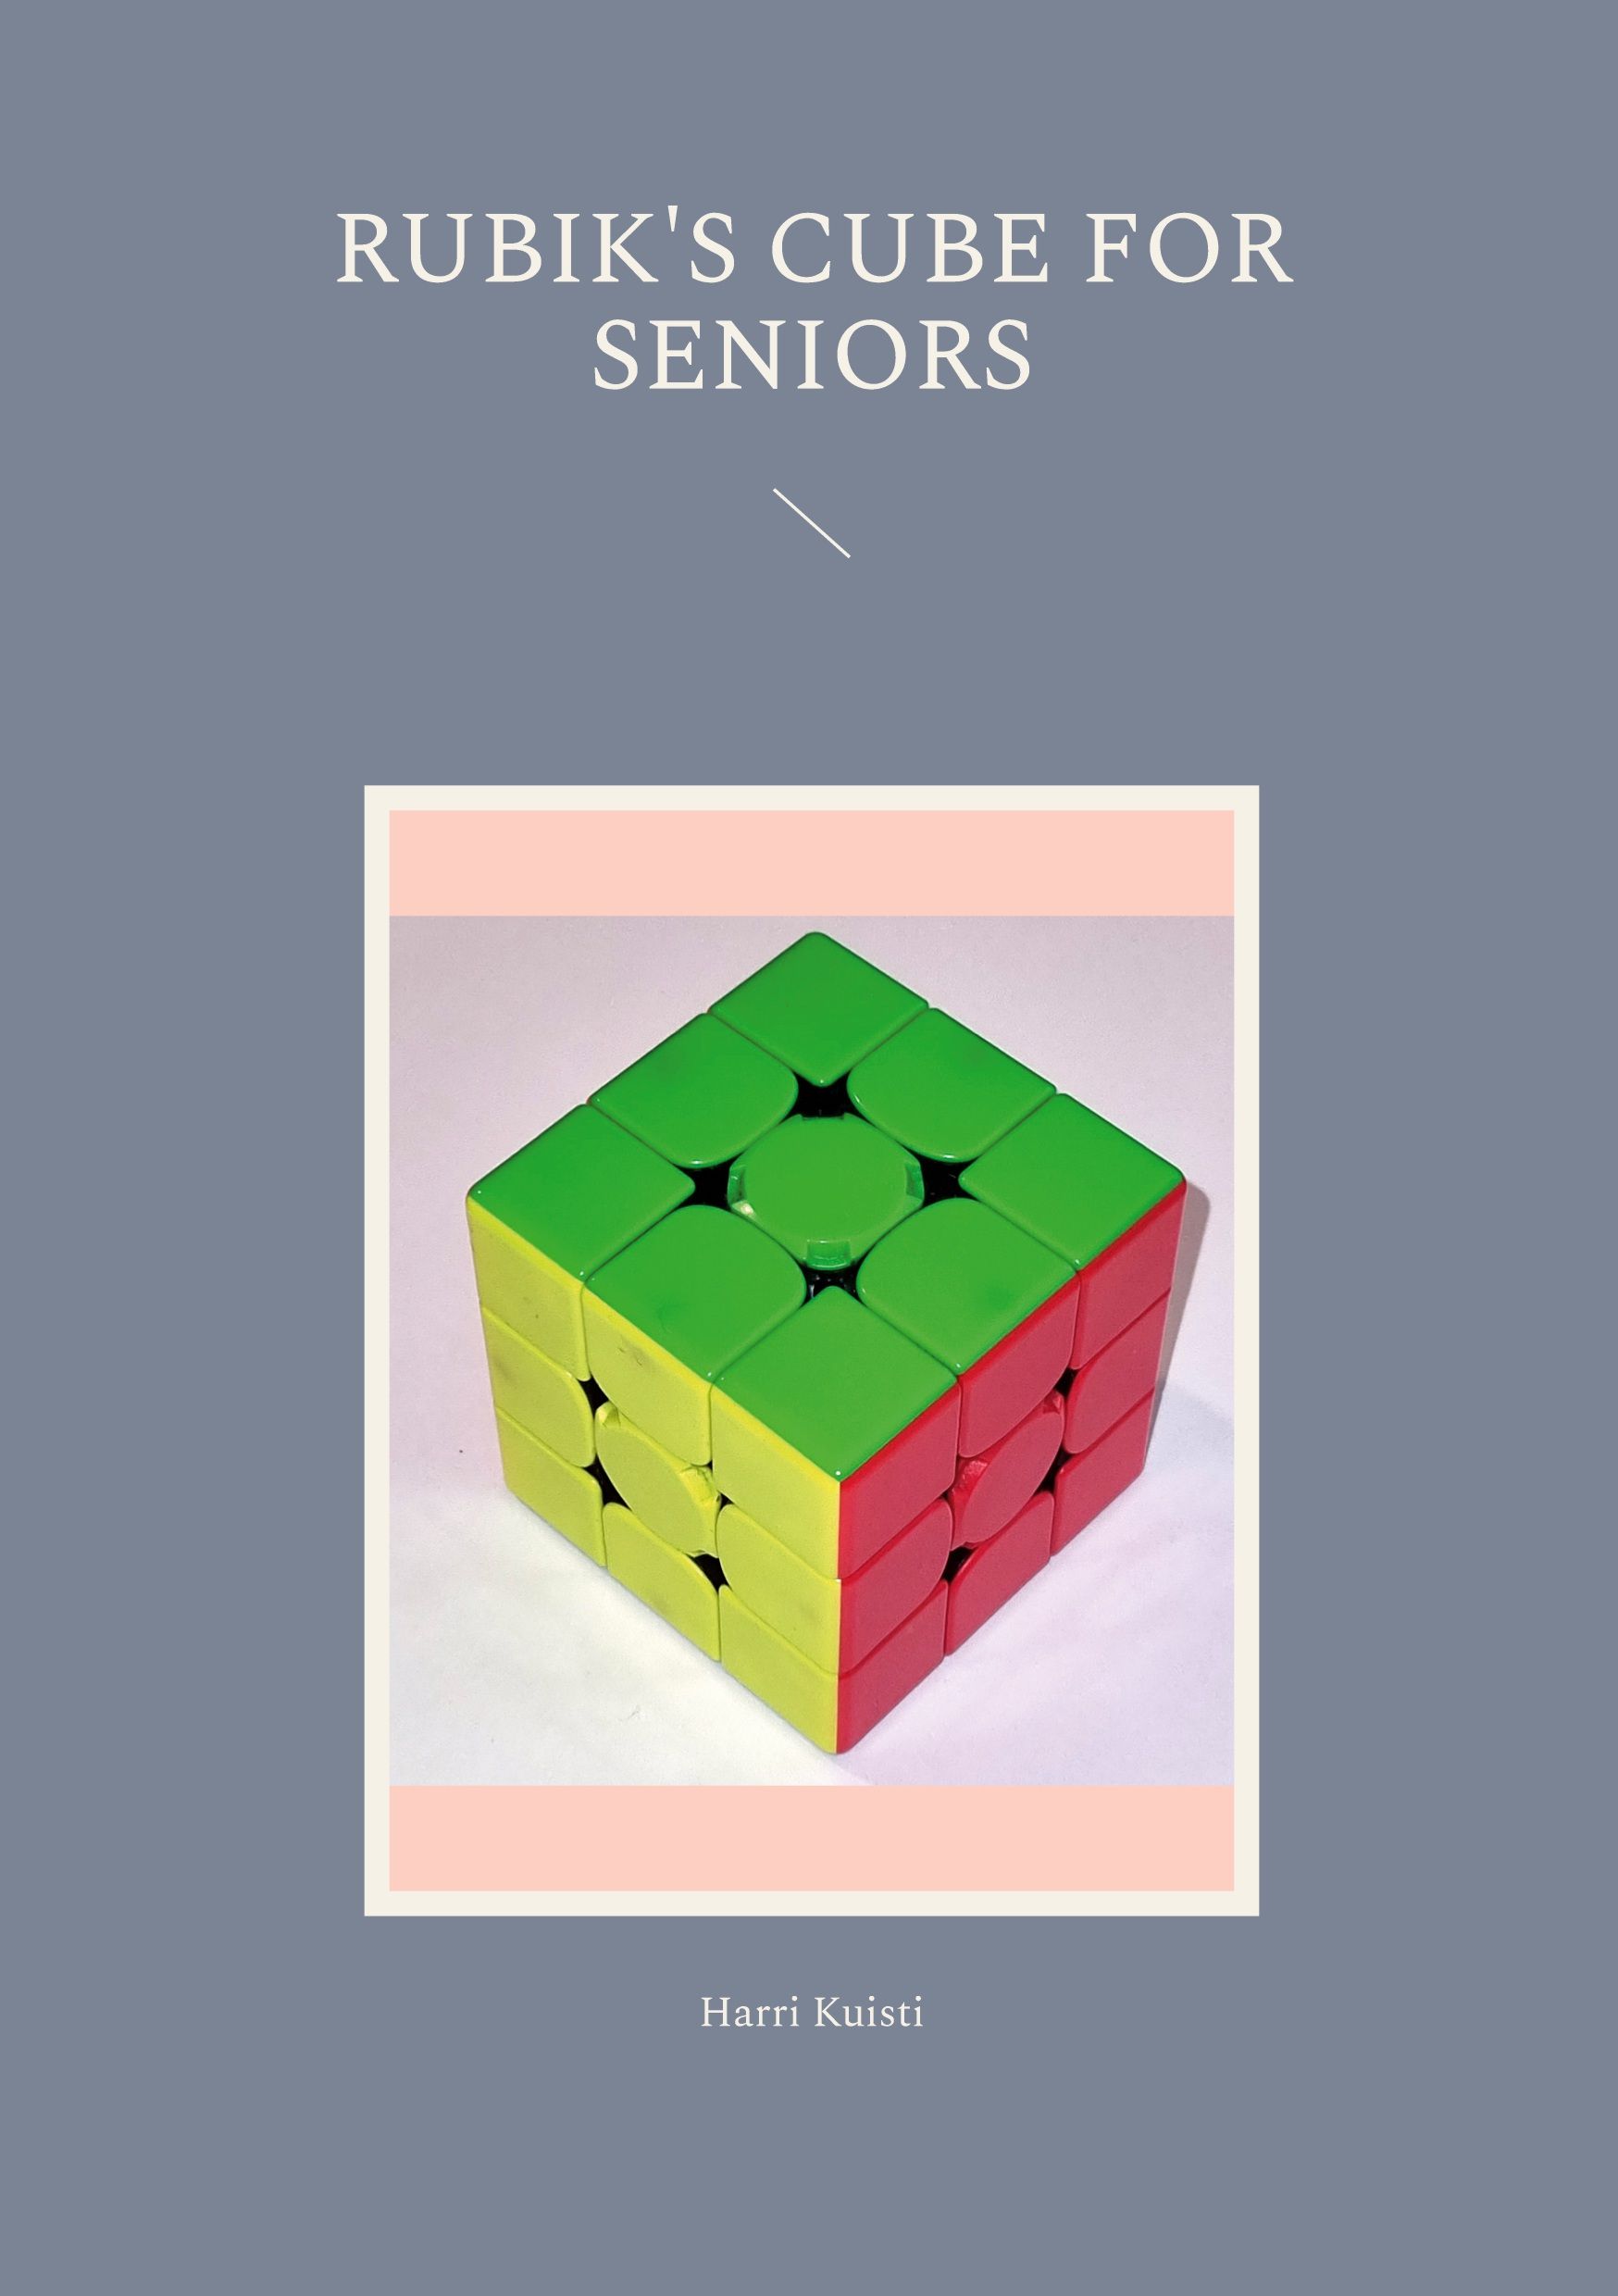 Harri Kuisti : Rubik's Cube for Seniors